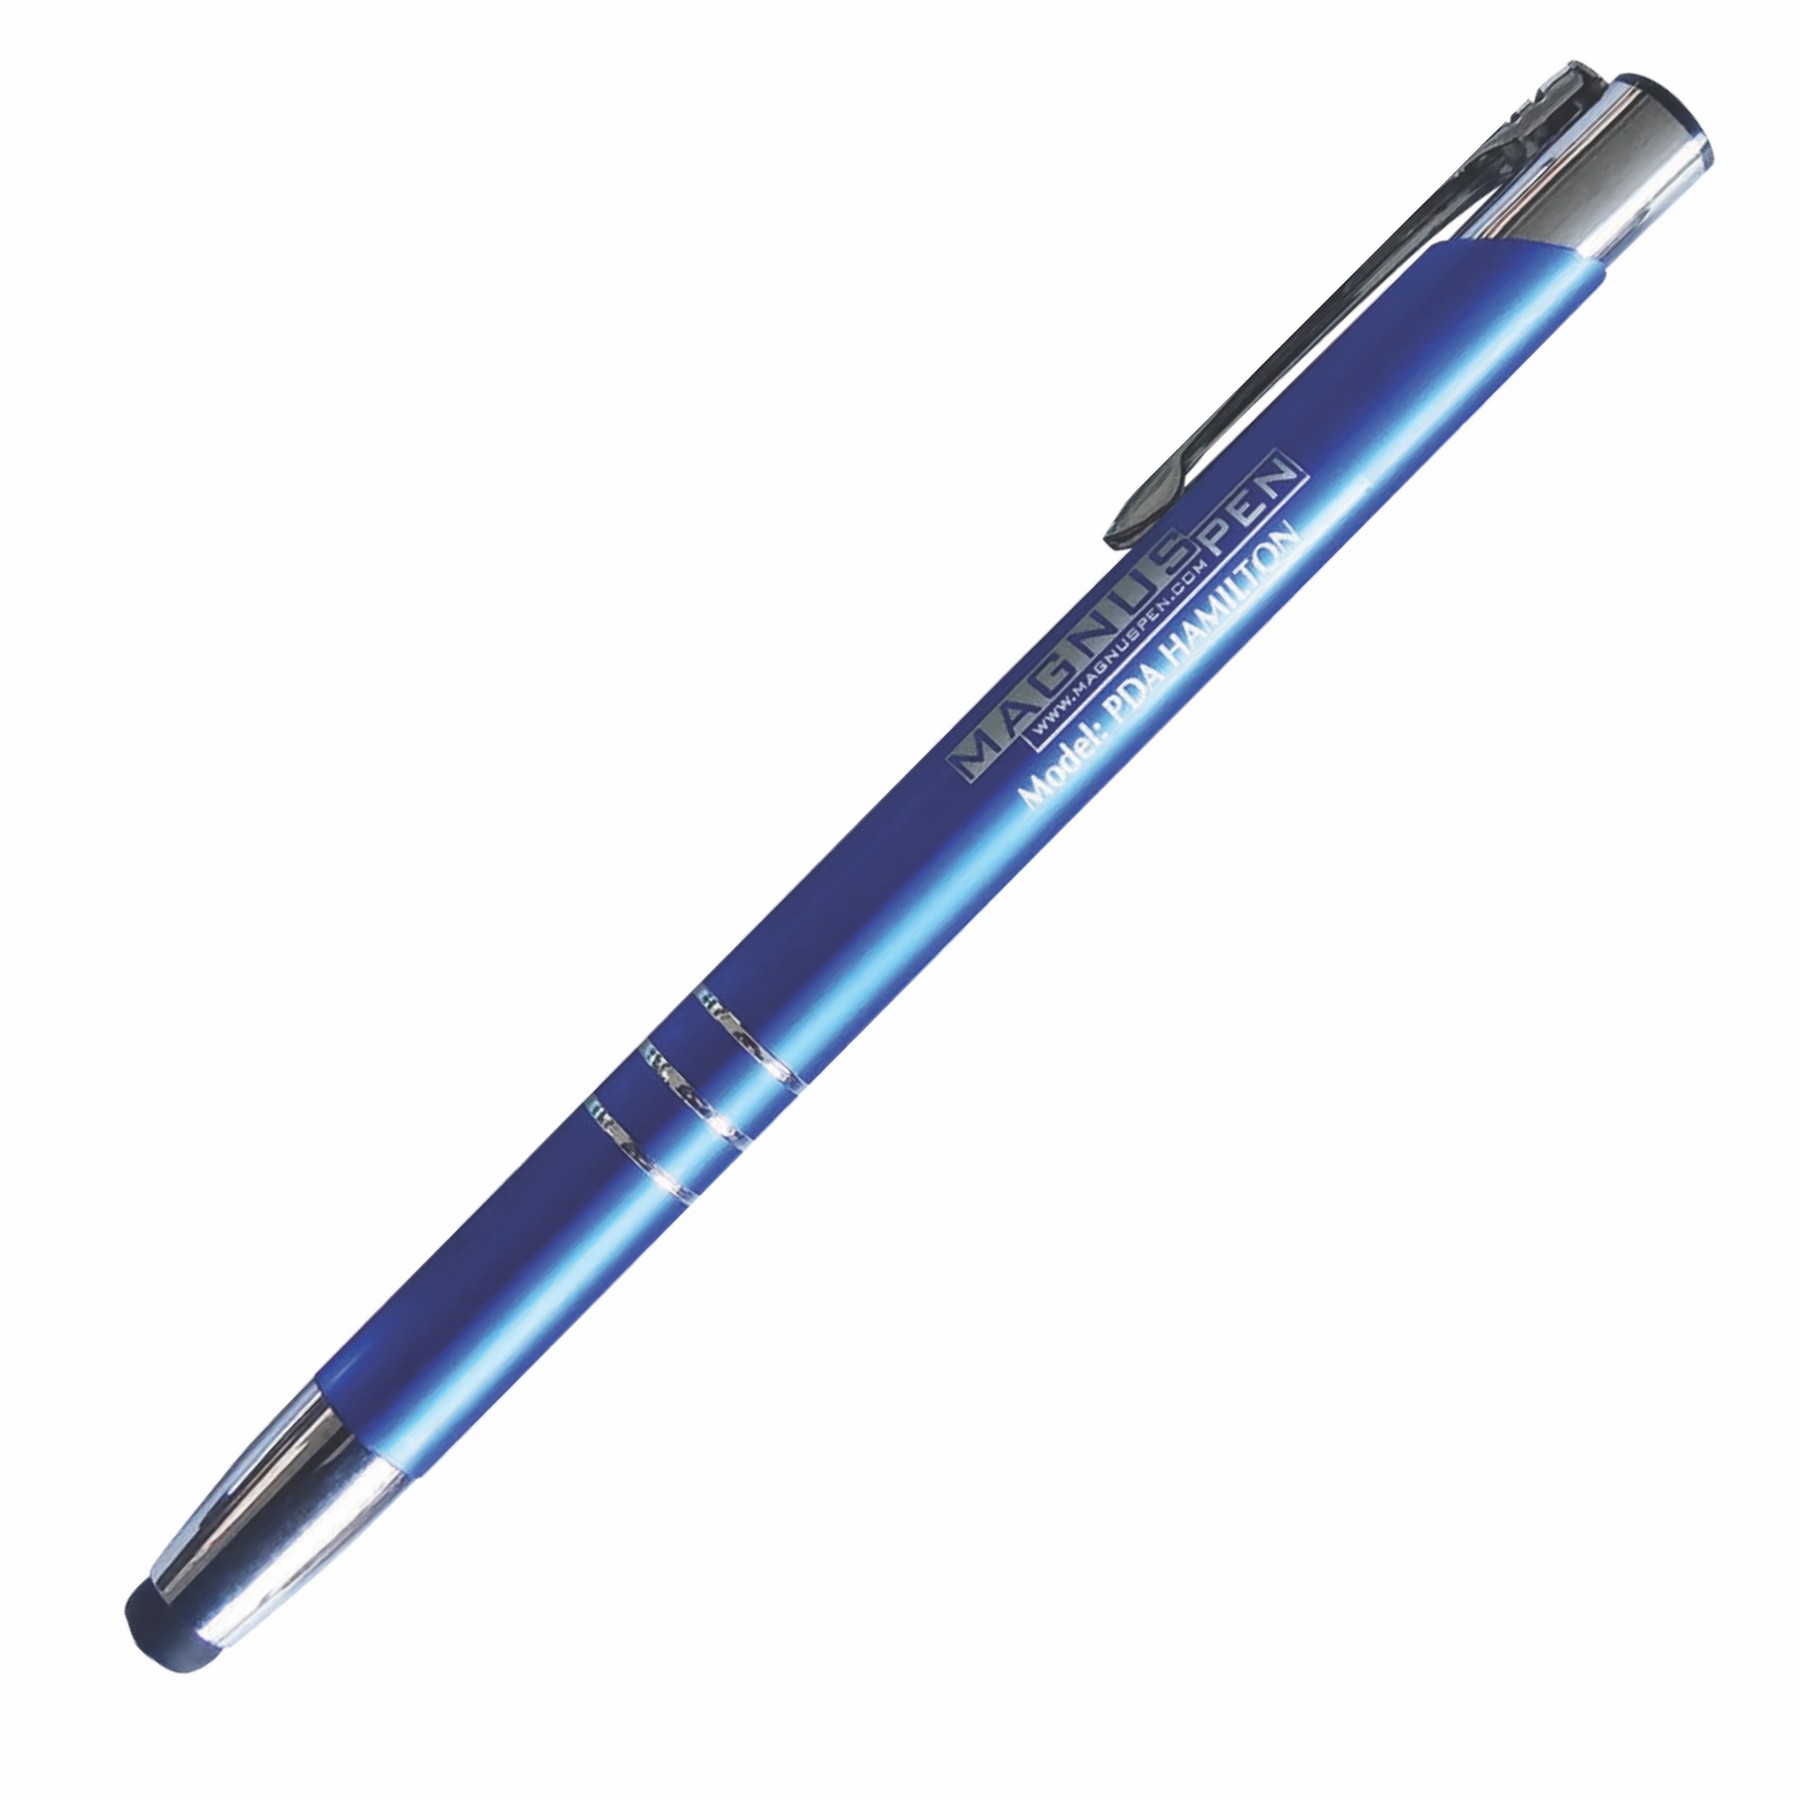 PDA HAMILTON Aluminum Barrel, Metallic clip Plunger Action Ball Point Pen (Stock 3-5 Days)